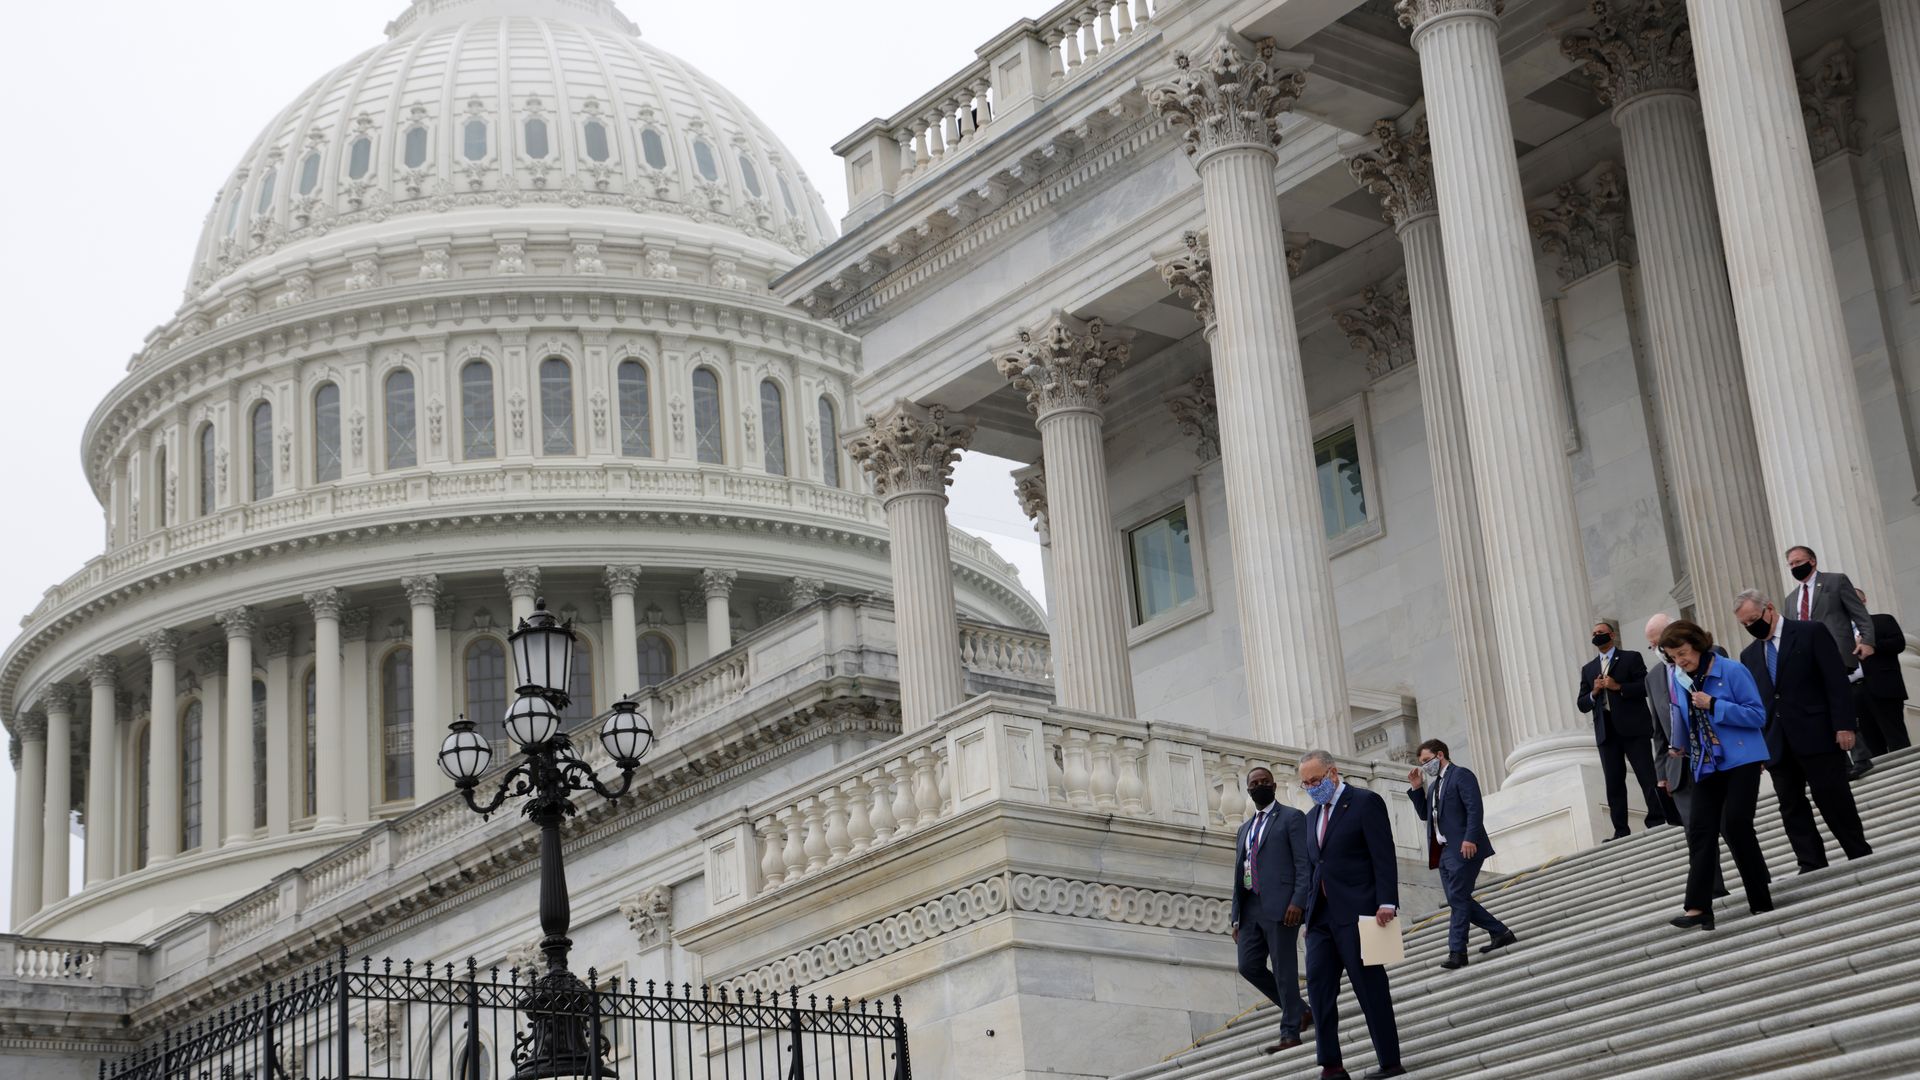 Senators walking down the steps outside the Capitol building.